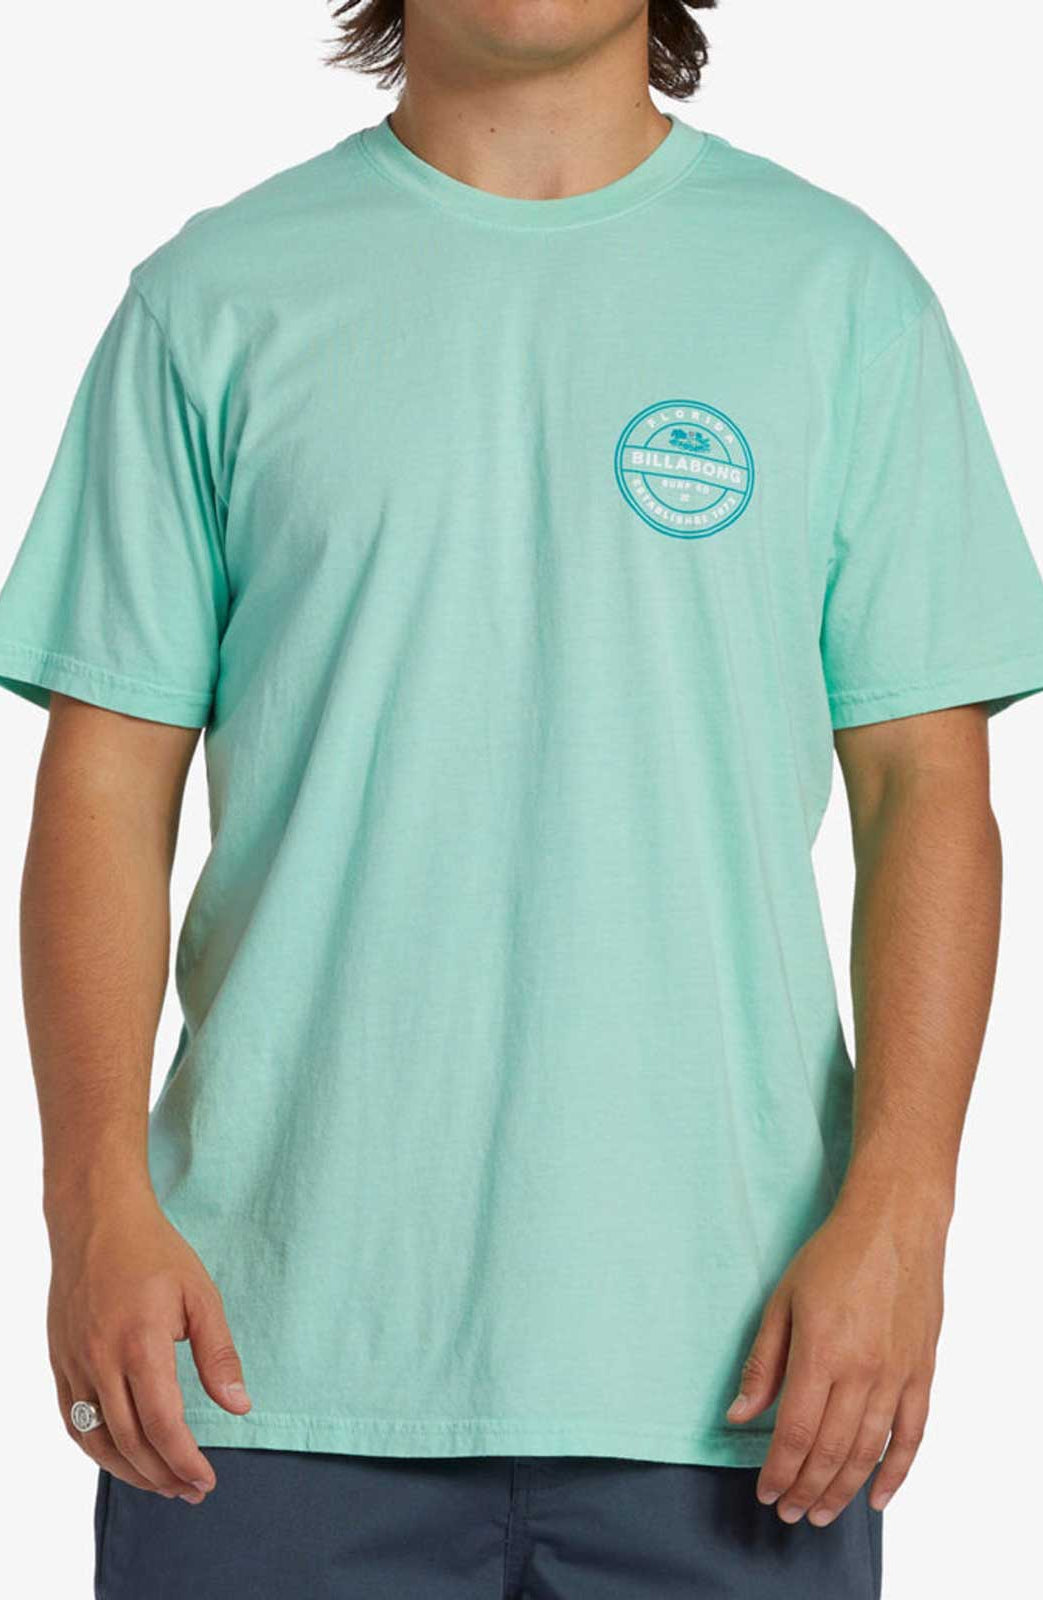 Billabong: Gator Rotor Florida Short Sleeve T-Shirt